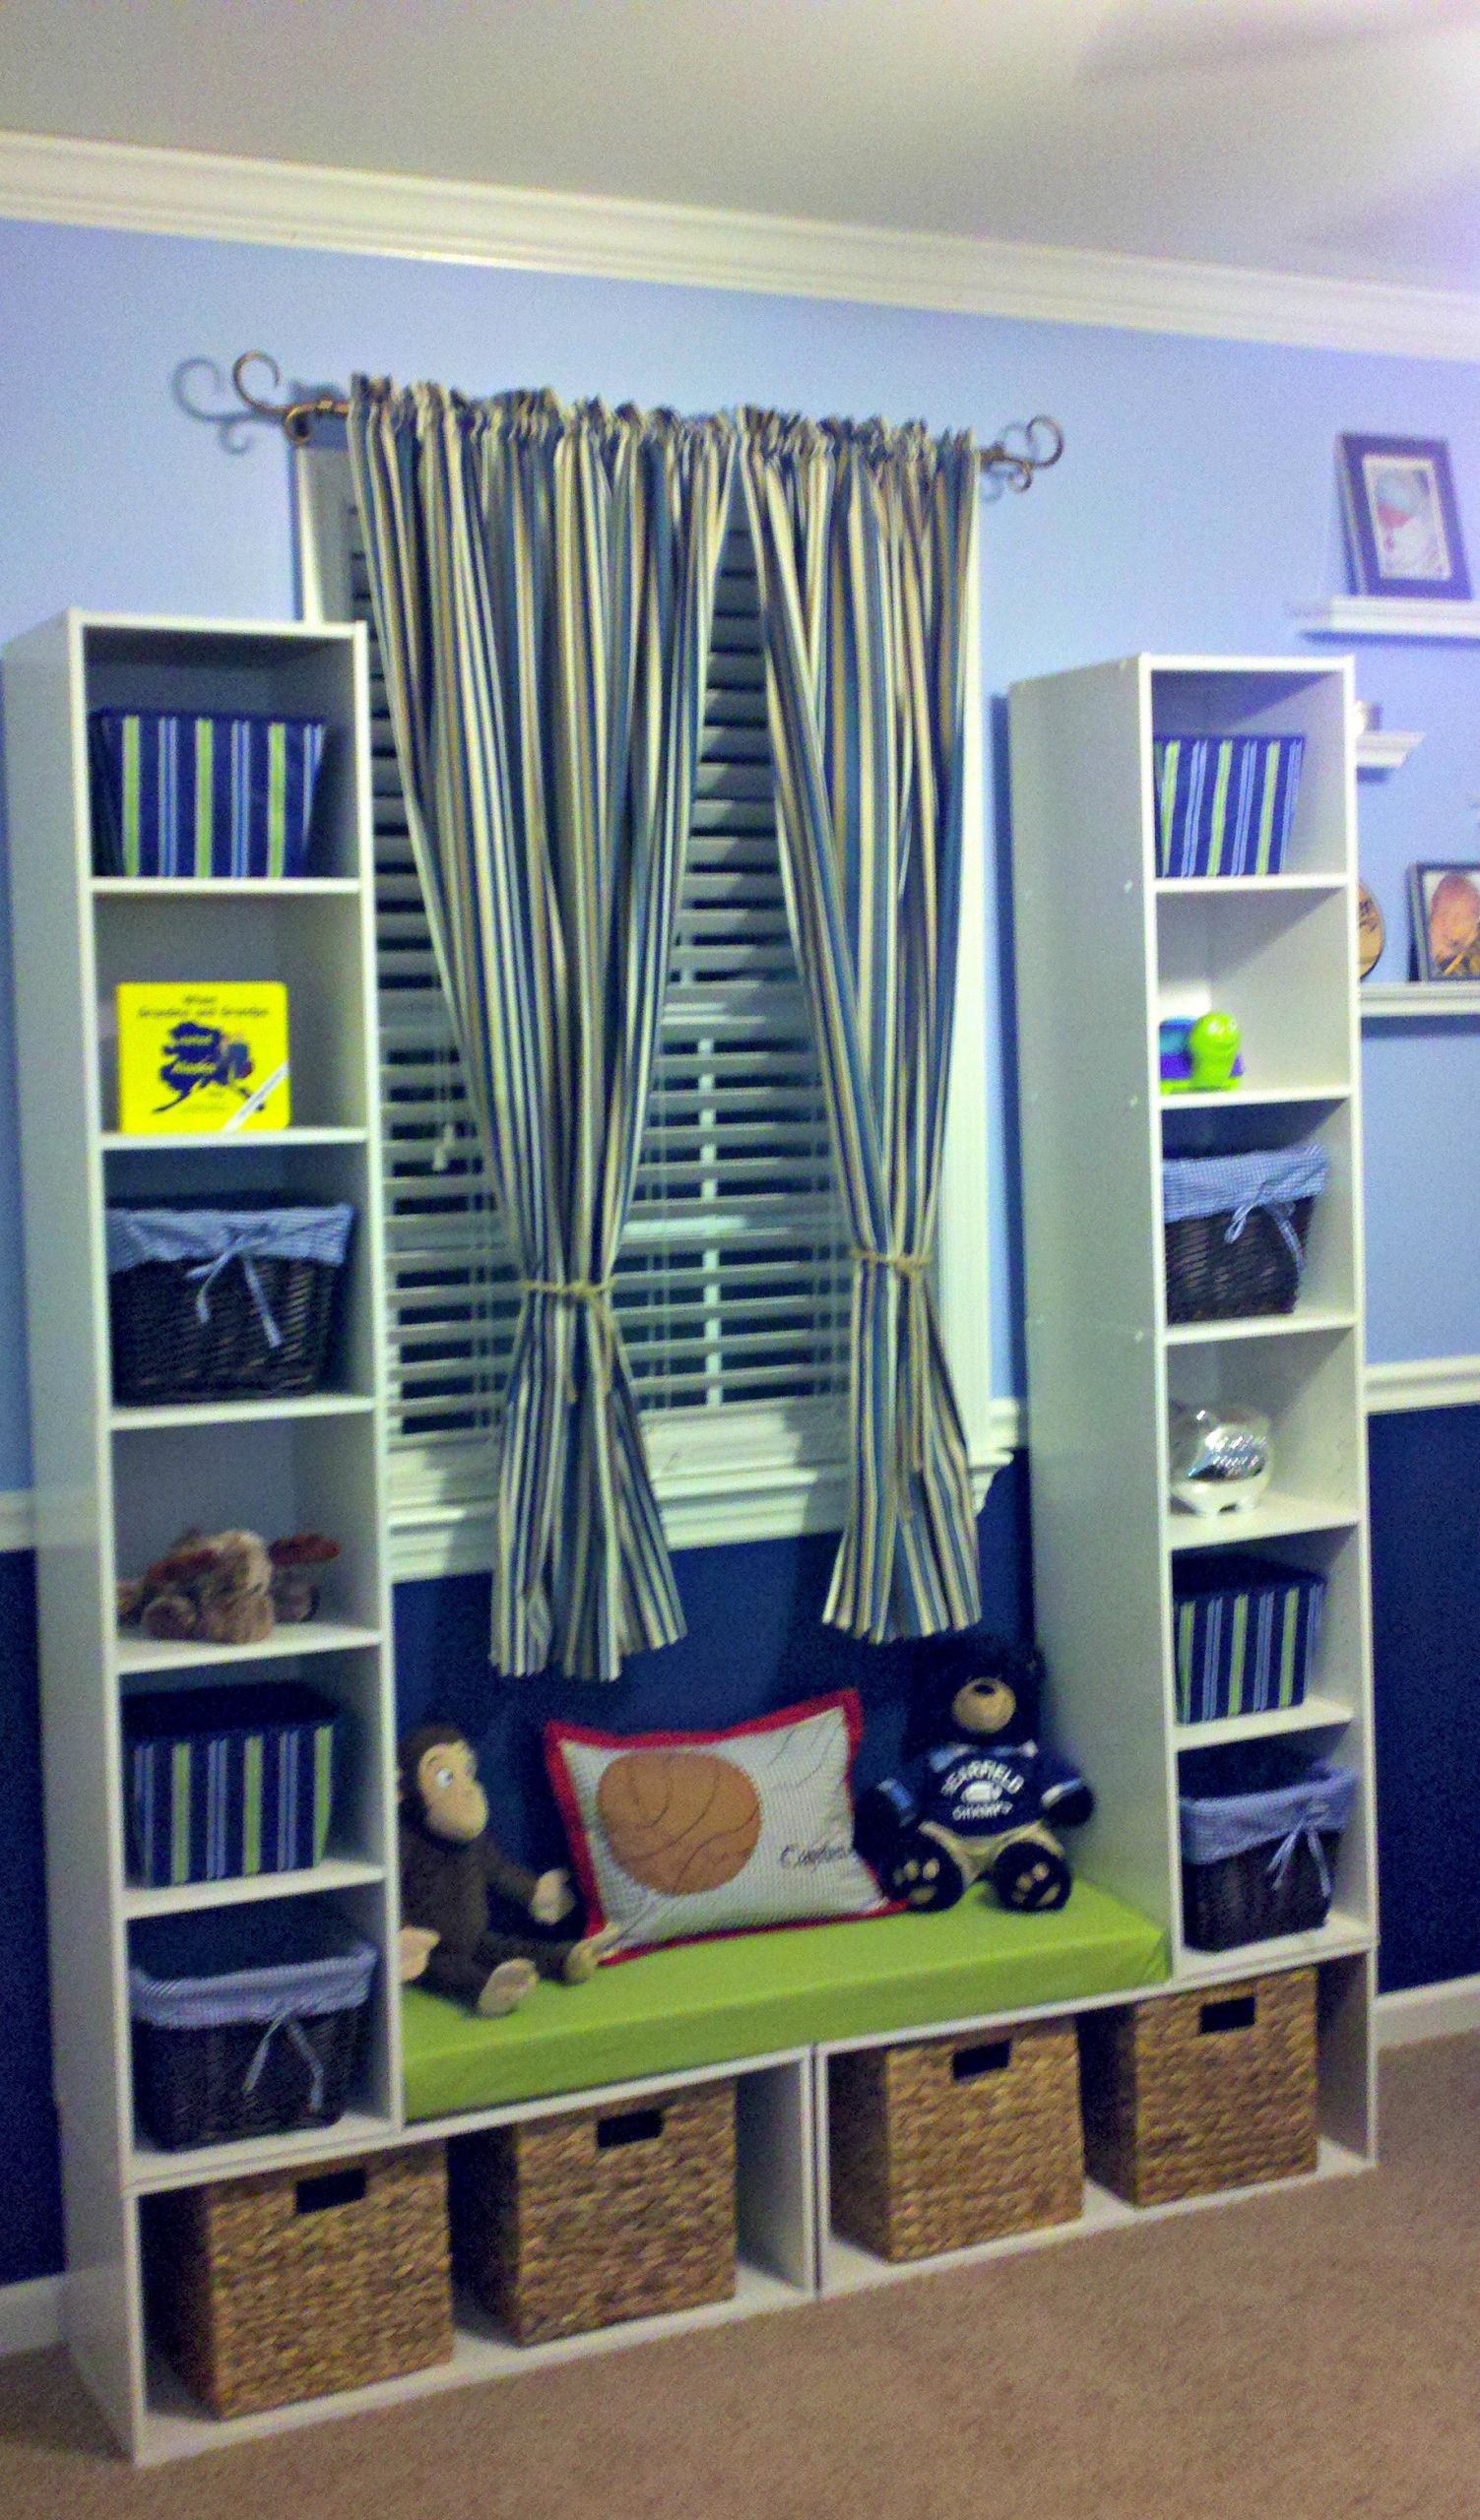 Kids Bedroom Organization Ideas
 Maybe for M s big boy room DIY Storage Unit with window